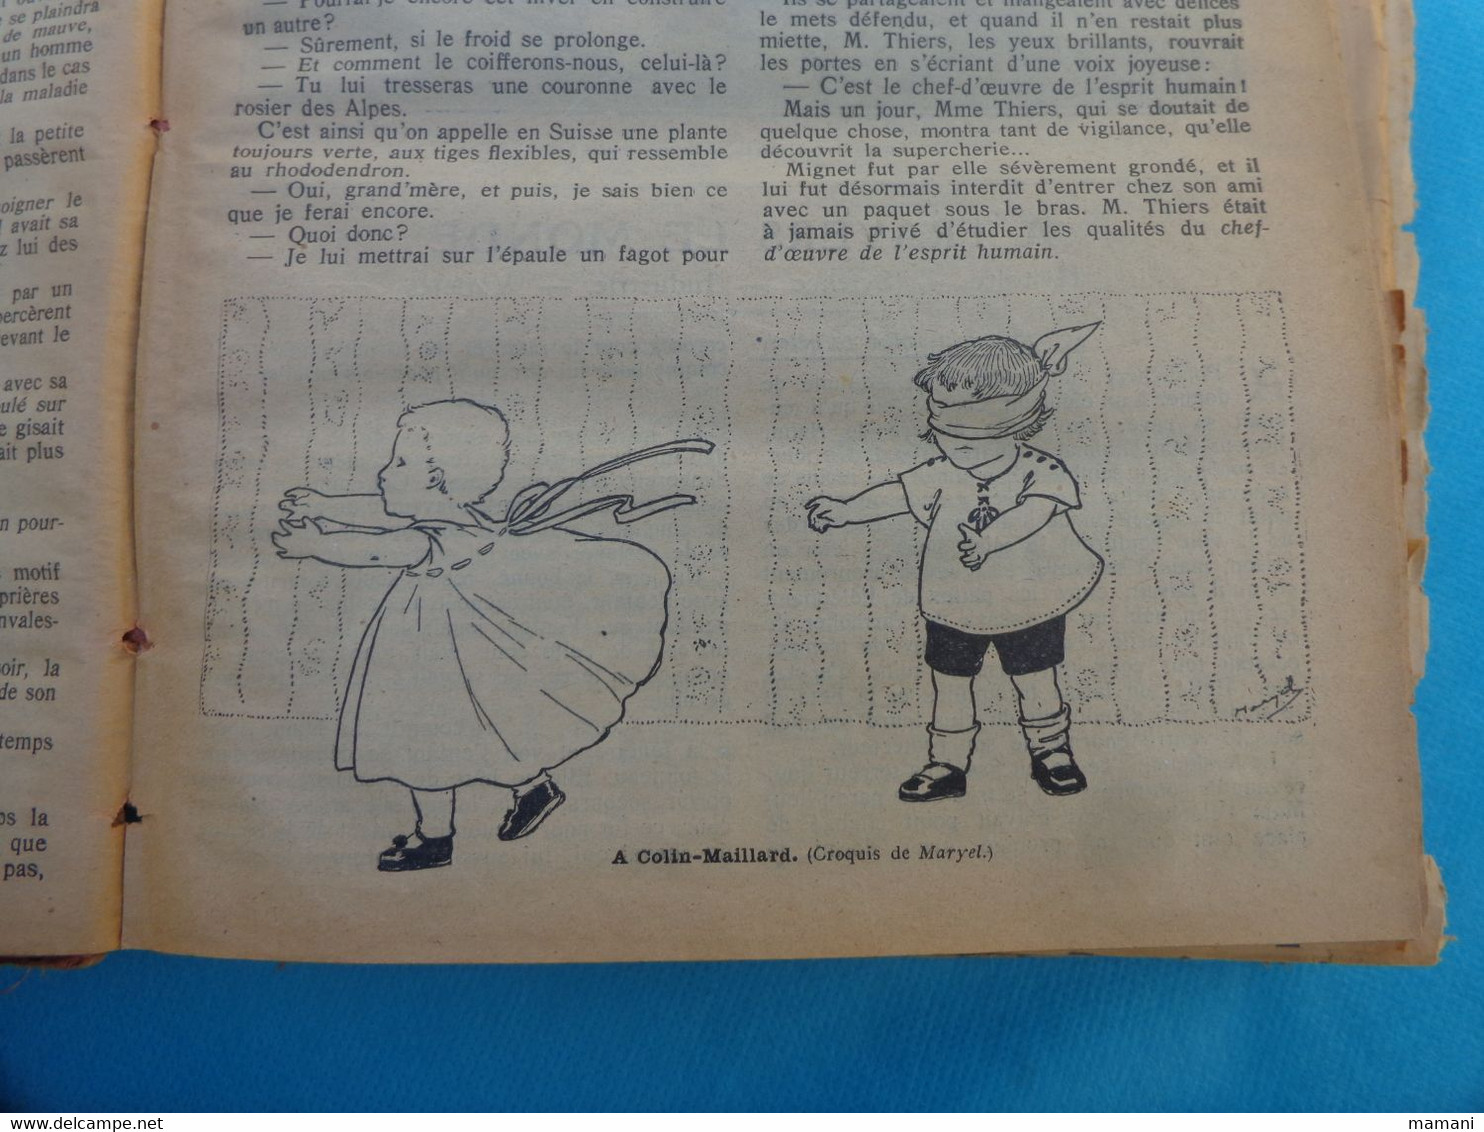 l'etoile noeliste n° 374 7/7/1921 a 399 du 29/12/1921 illustrateur mayrel